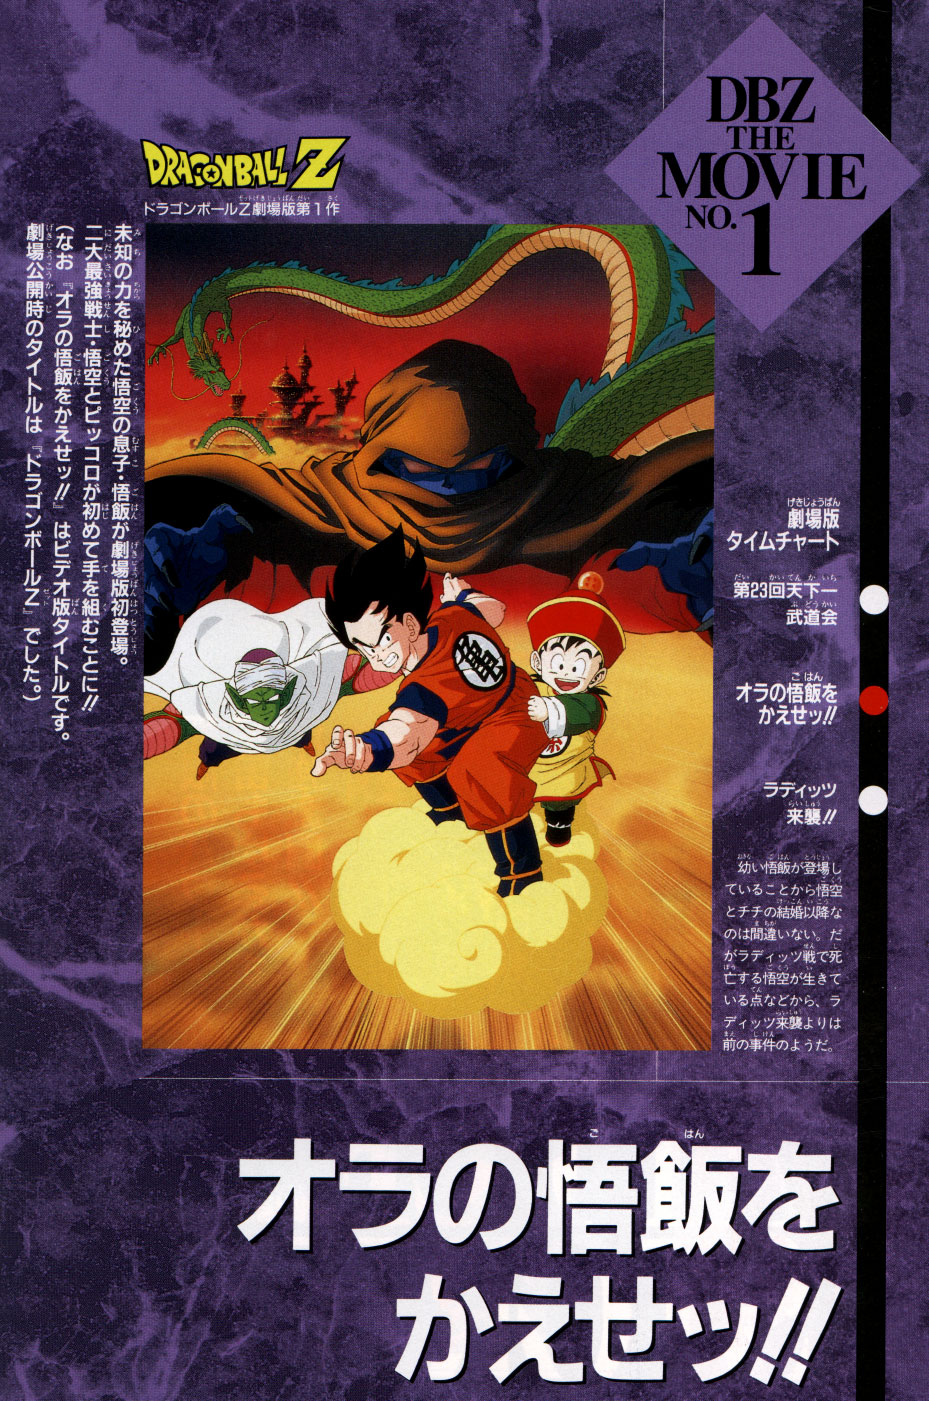 Dragon Ball Z movie 1 | Japanese Anime Wiki | FANDOM ...